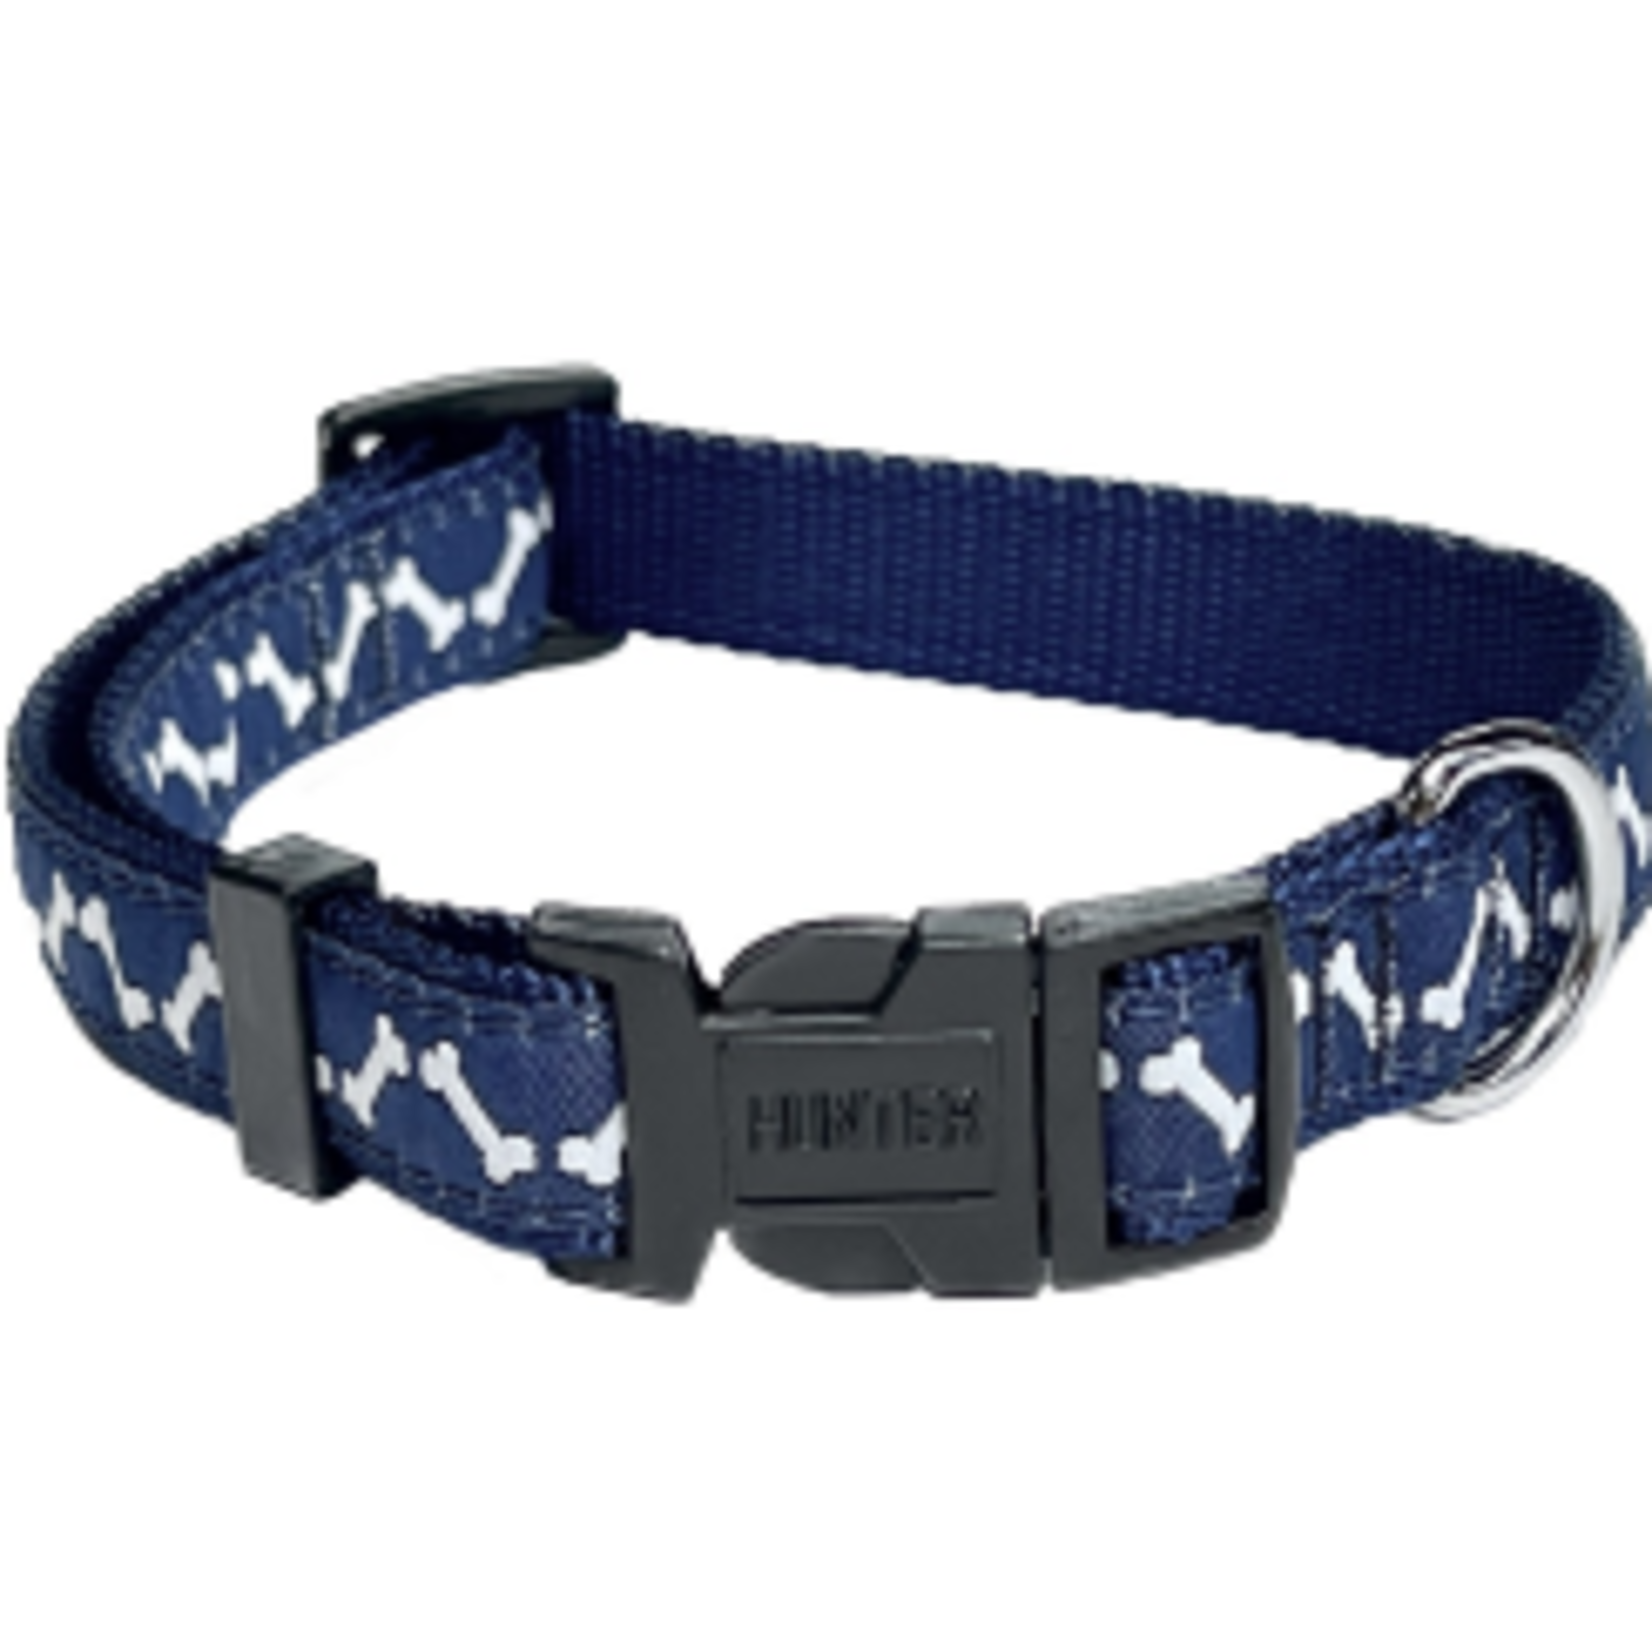 Hunter Brand Adjustable Nylon Collar - Clip type - Blue/Bones